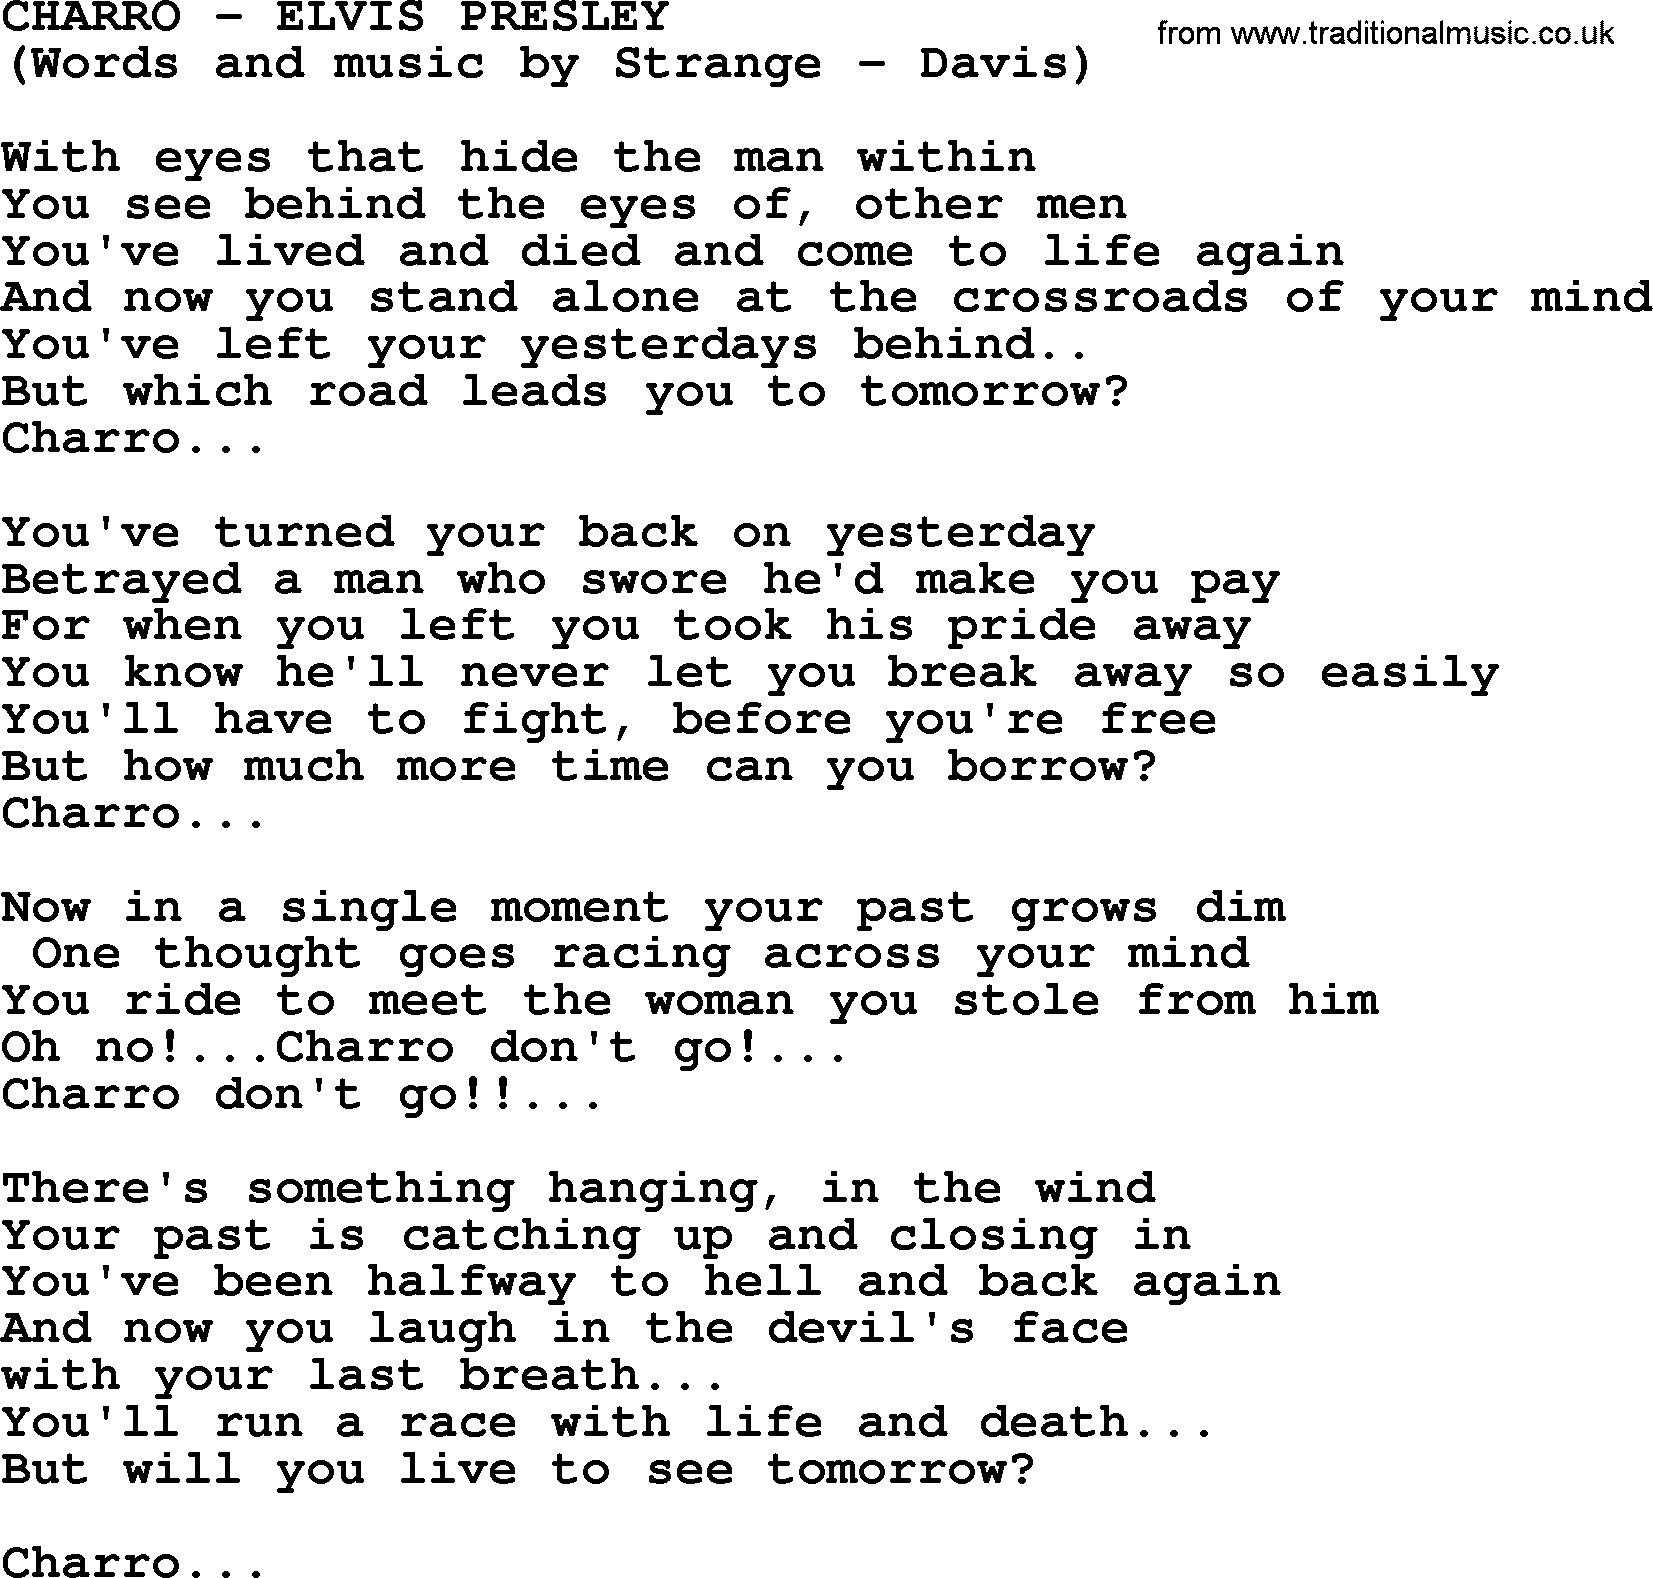 Elvis Presley song: Charro lyrics